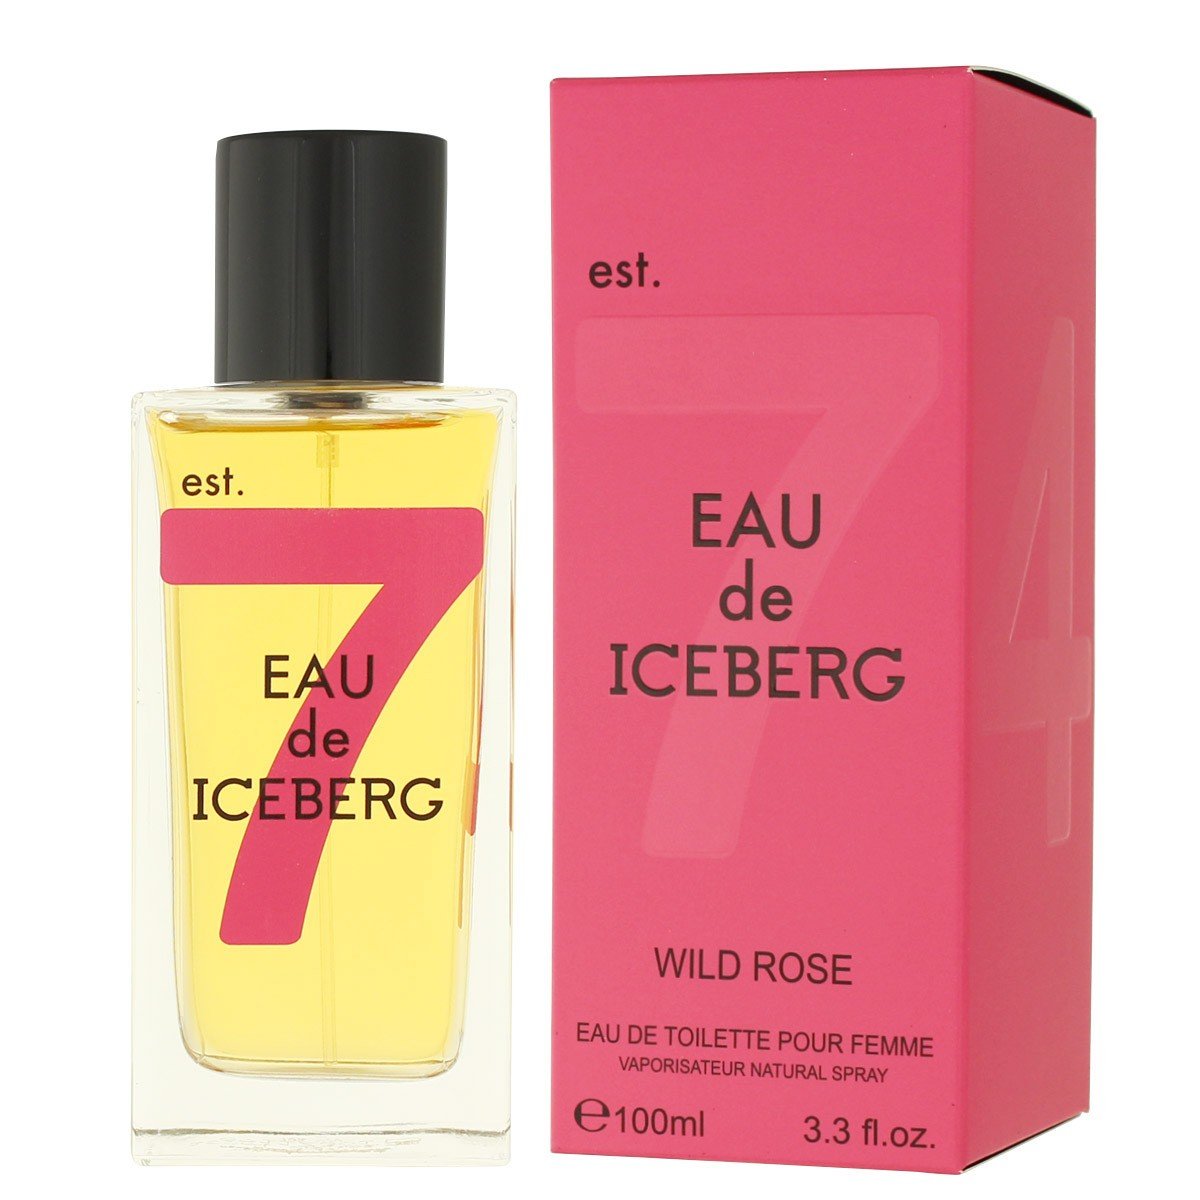 Planet Perfume - Amazing Deals Fragrances Iceberg On